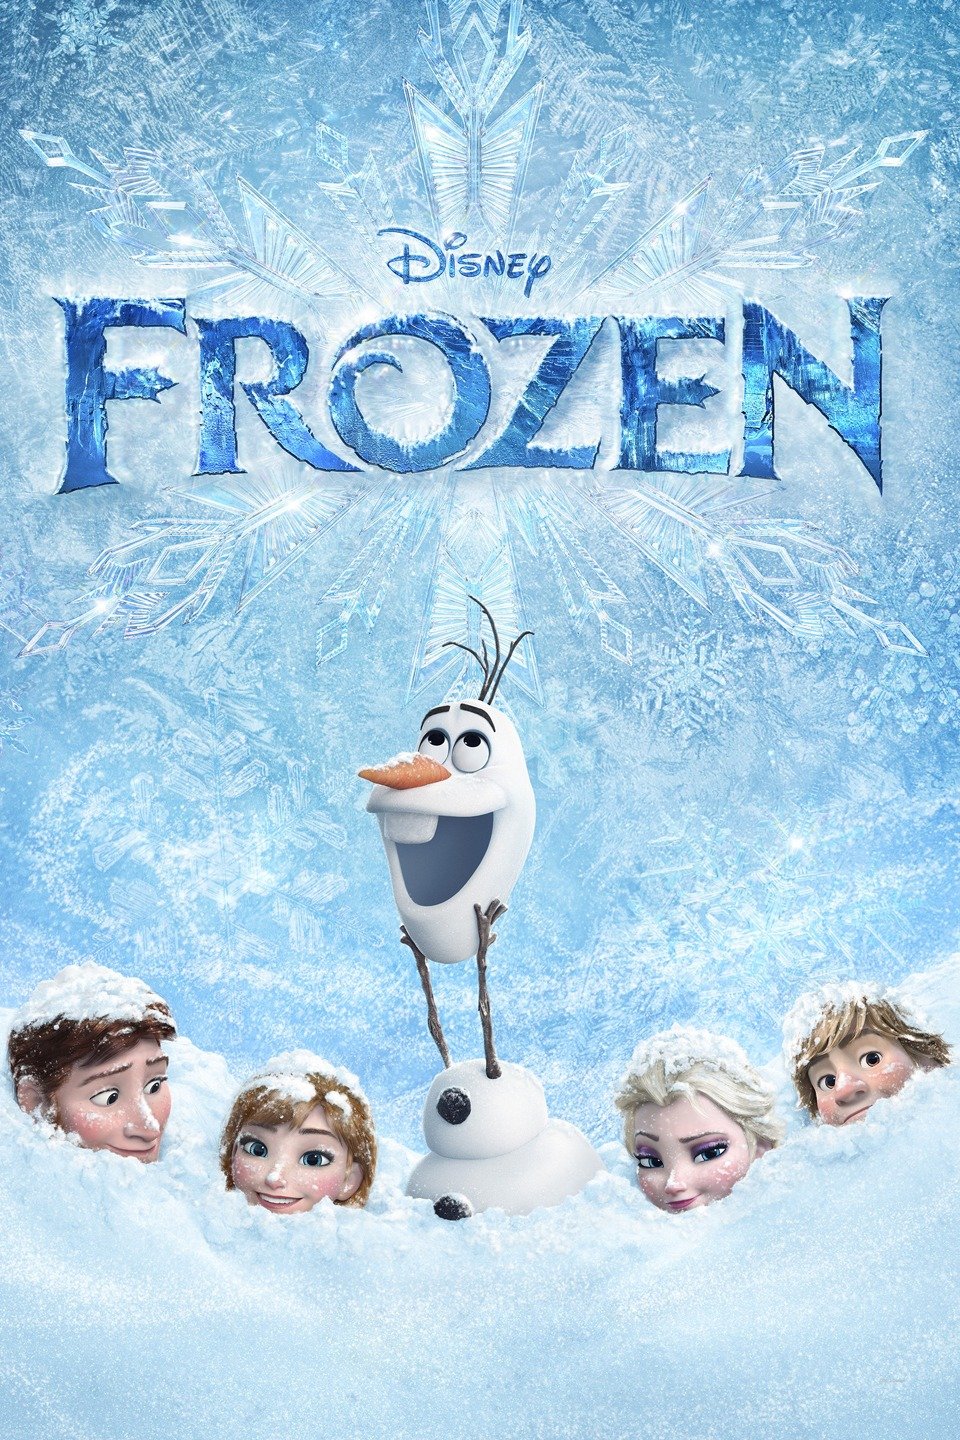 [MINI Super-HQ] Frozen (2013) ผจญภัยแดนคำสาปราชินีหิมะ [1080p] [พากย์ไทย 5.1 + อังกฤษ DTS] [BrRip.x264.DTS] [บรรยายไทย + อังกฤษ] [เสียงไทย + ซับไทย] [ONE2UP]